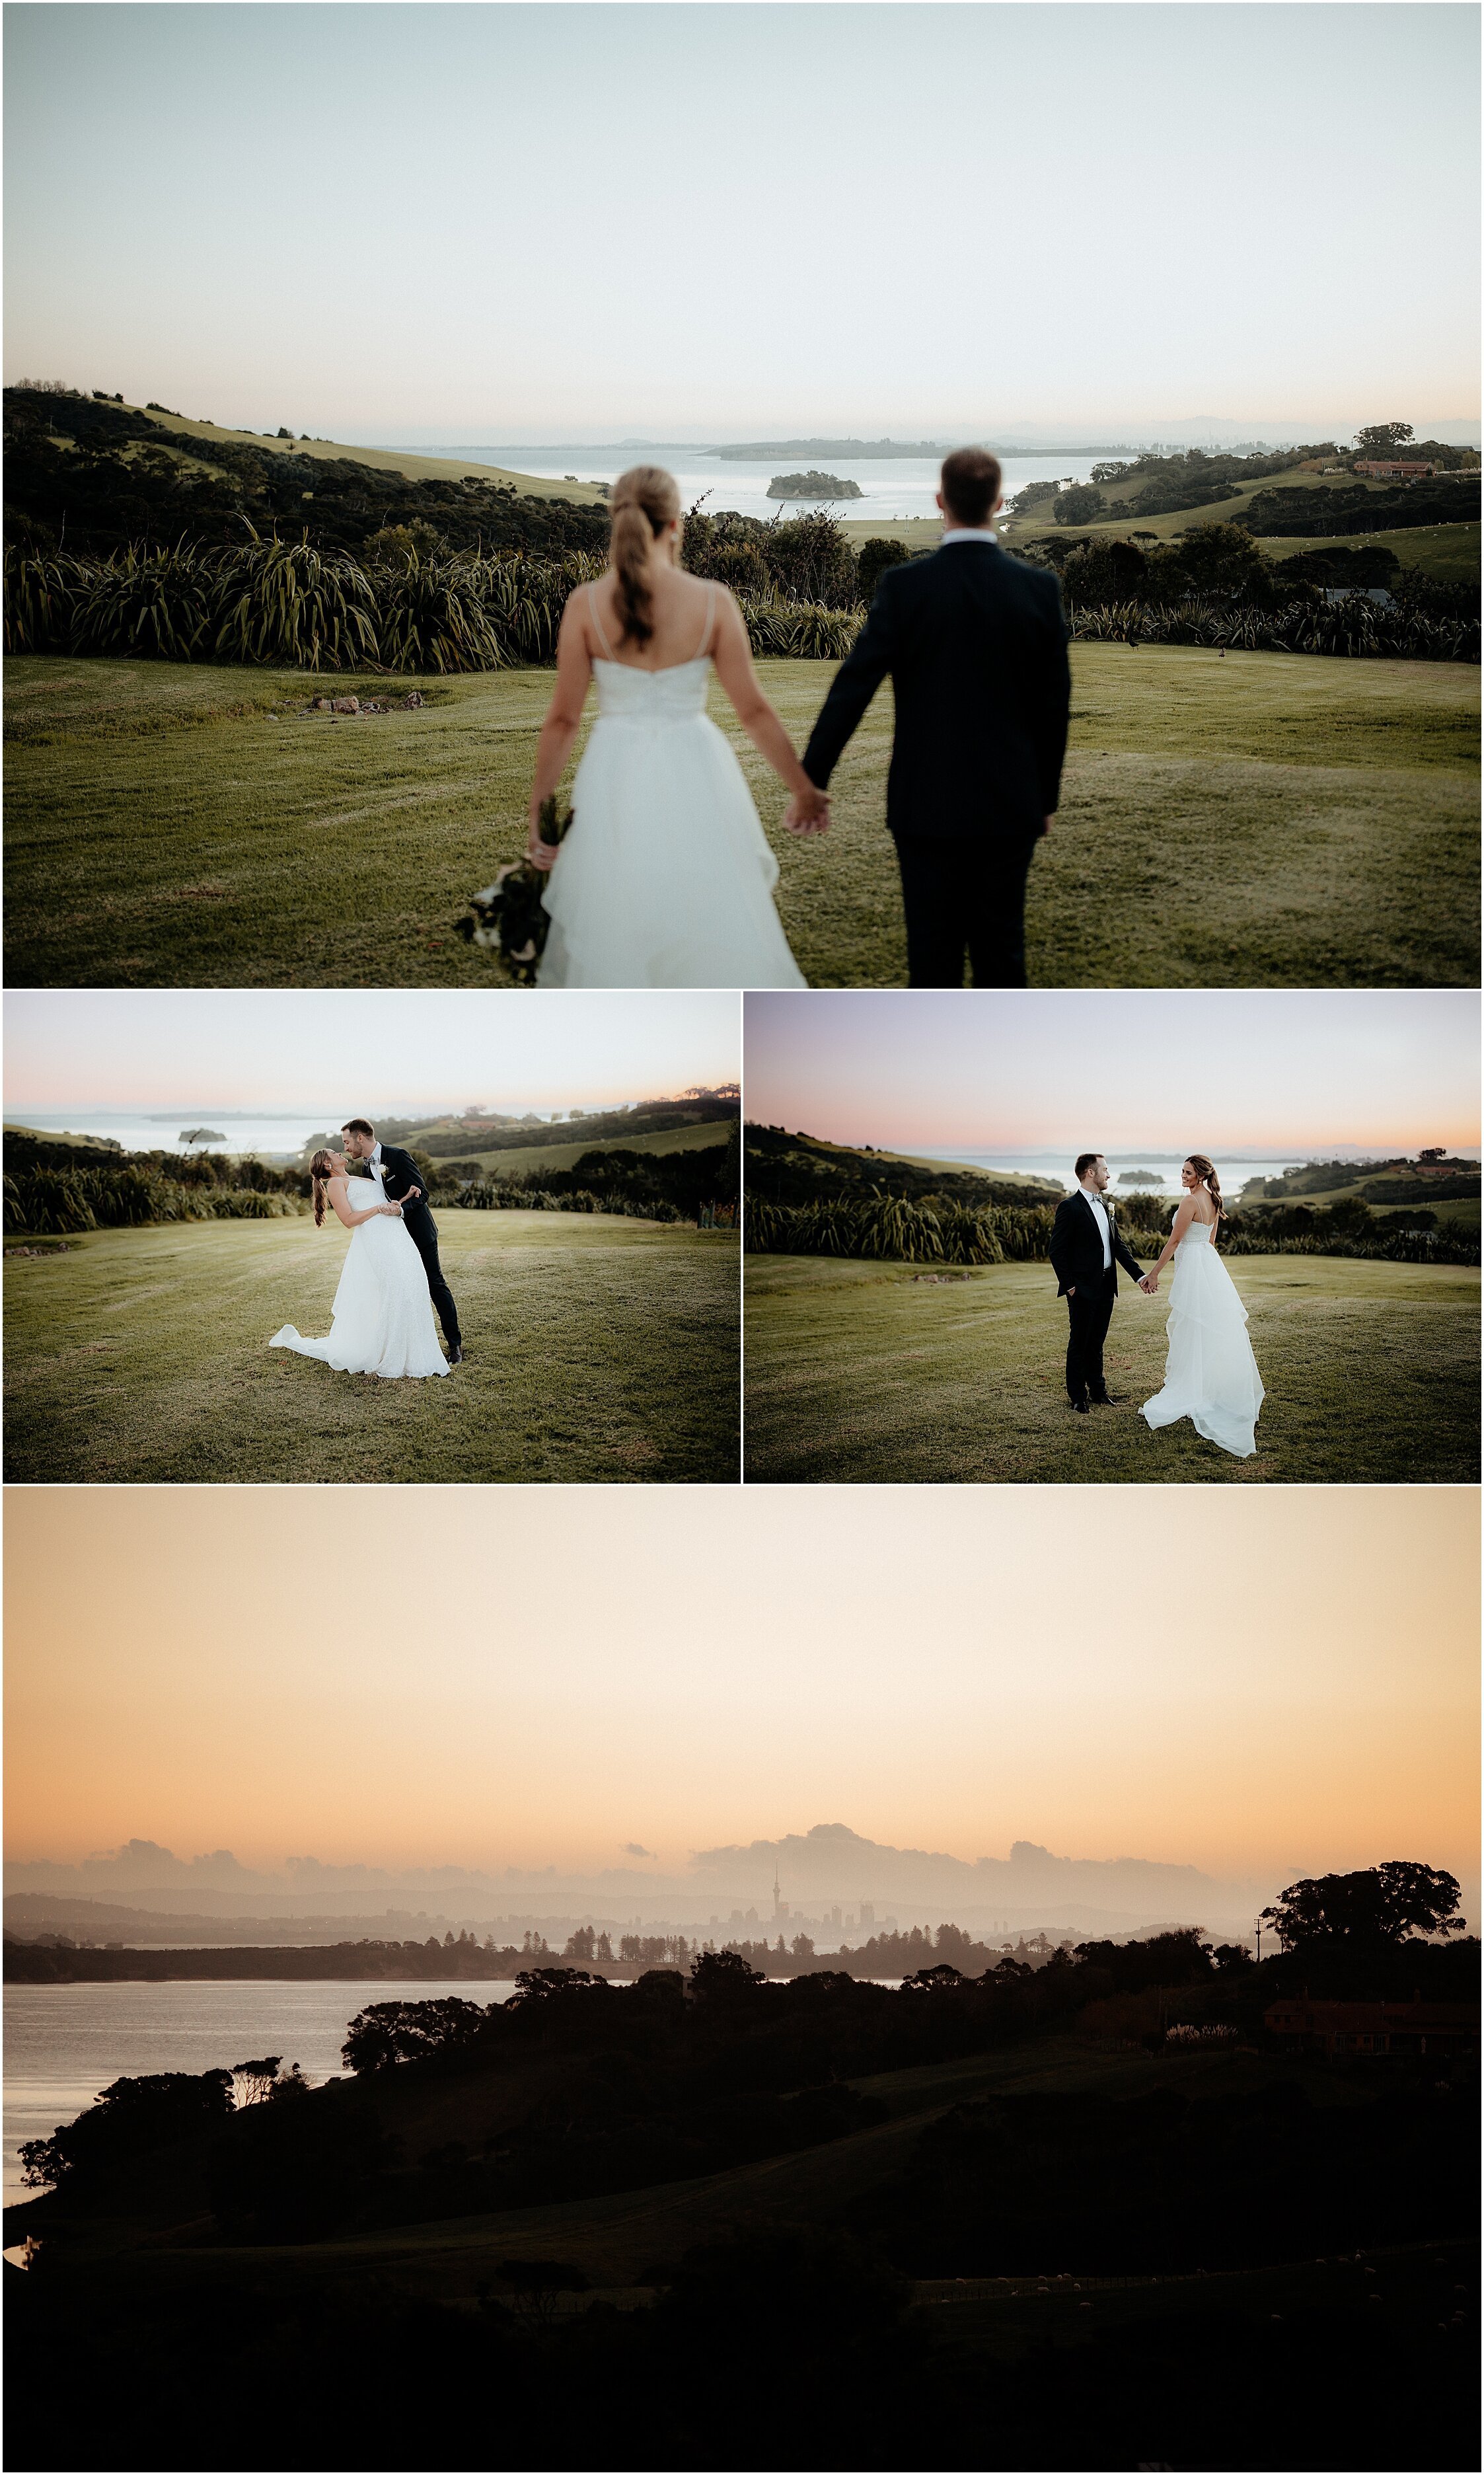 Zanda+Auckland+wedding+photographer+chic+vibrant+Cable+Bay+vineyard+venue+Waiheke+Island+New+Zealand_53.jpeg